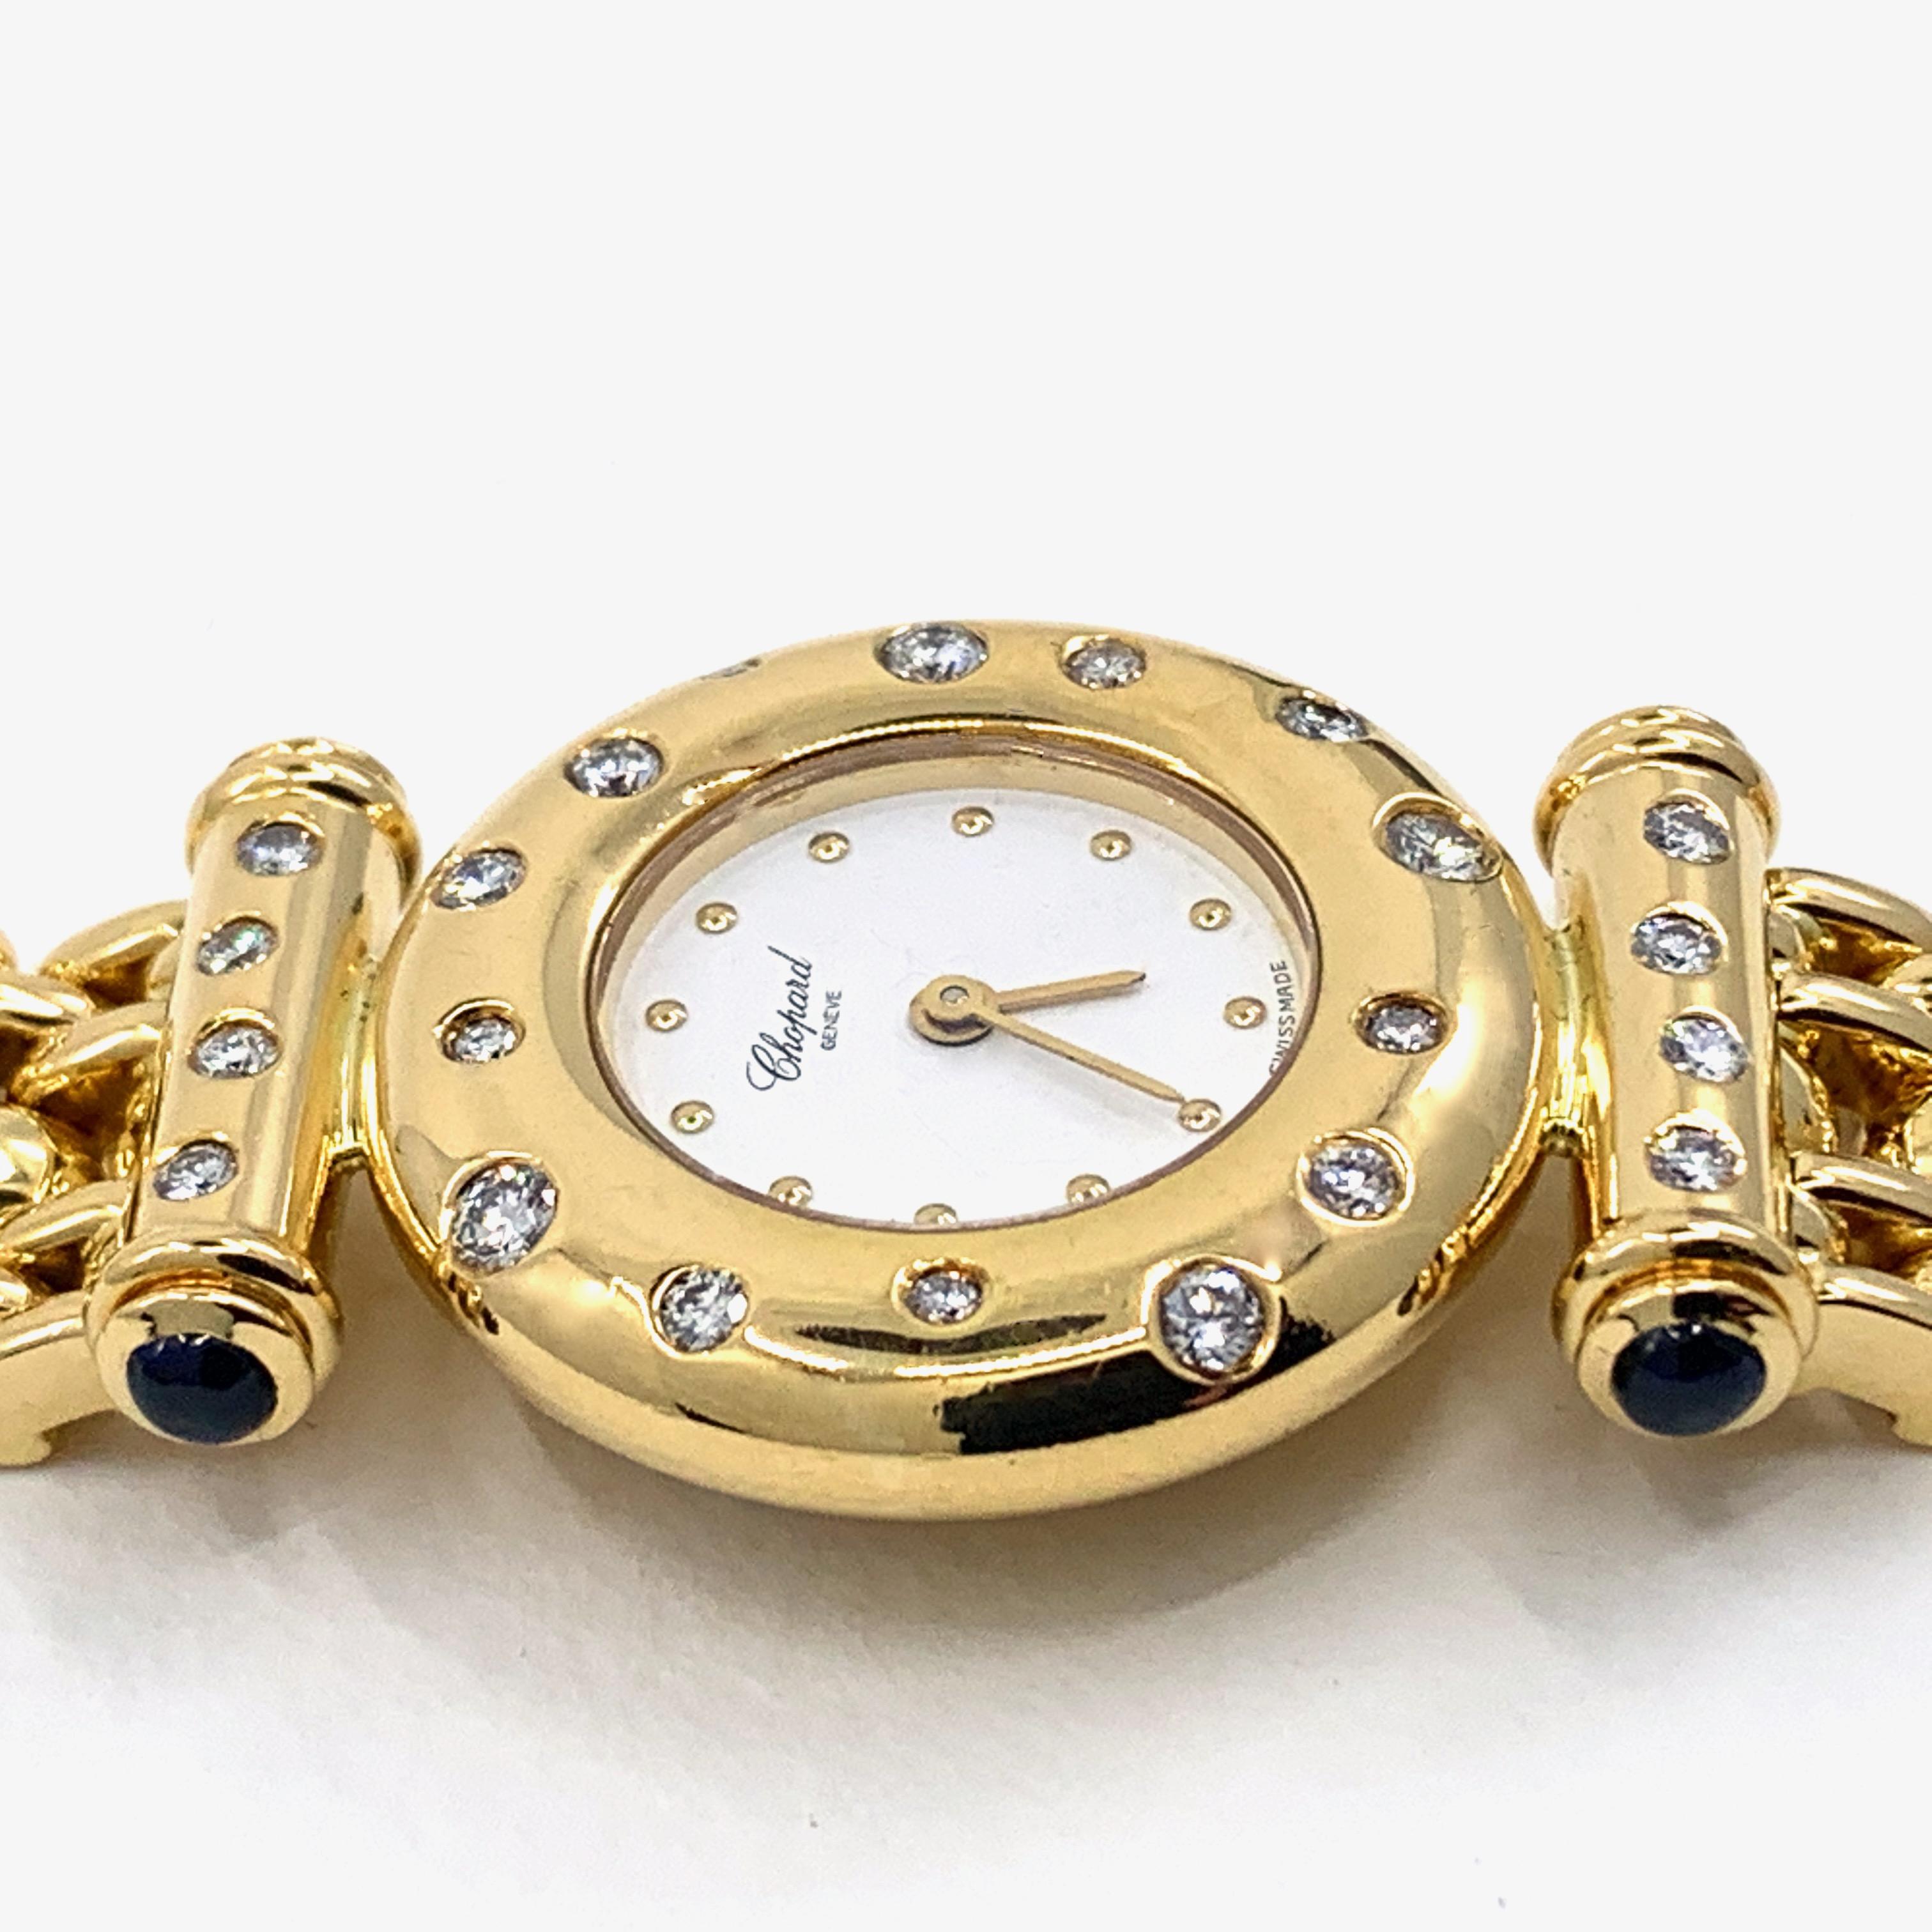 Brilliant Cut Chopard Femme Classique Quartz Diamond Watch in 18 Karat Yellow Gold, Circa 1990 For Sale